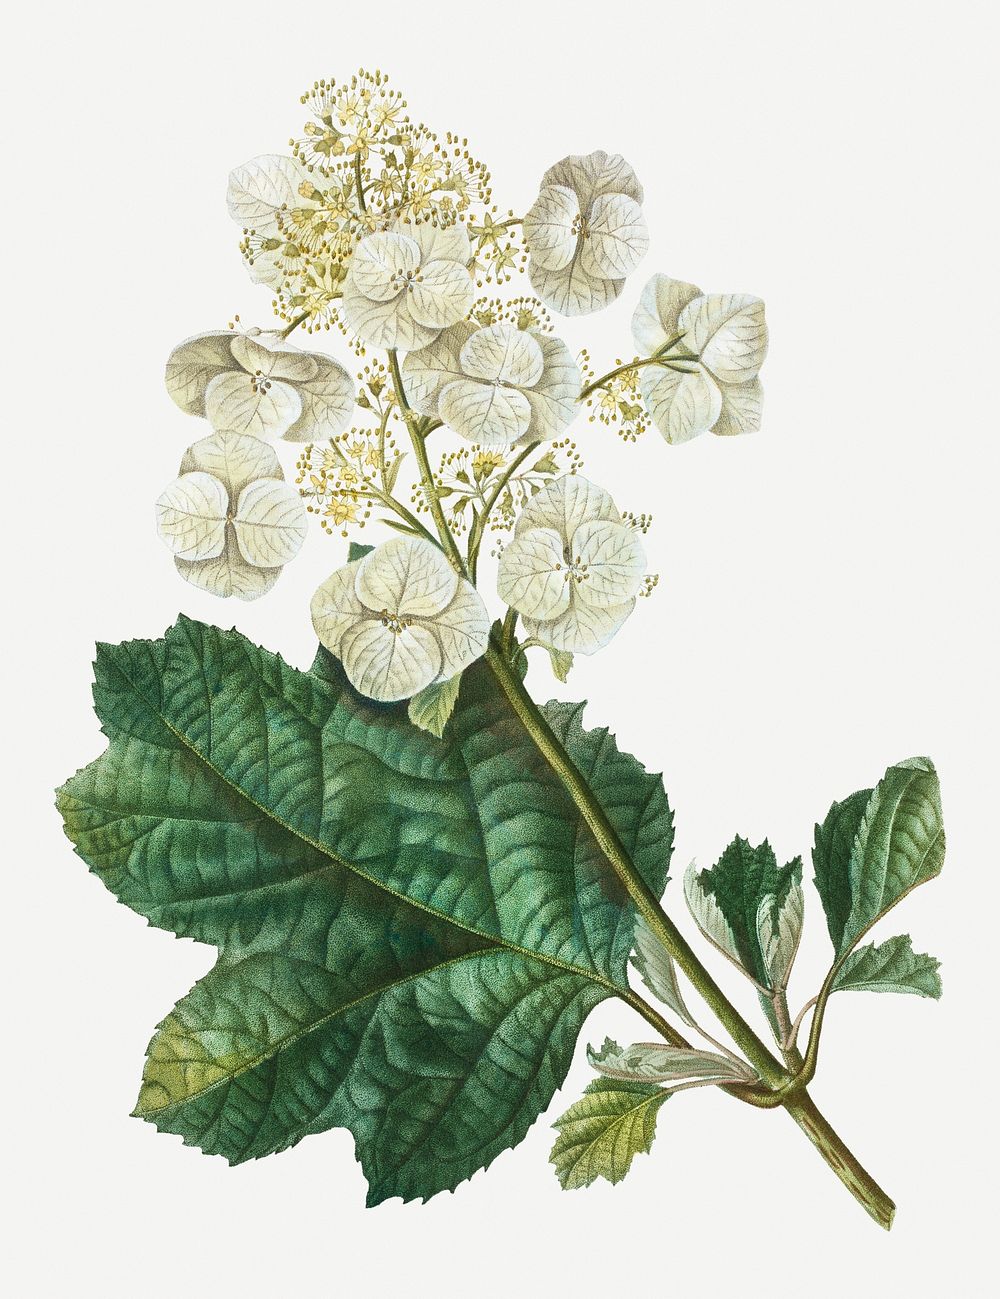 Oakleaf hydrangea flowering plant illustration